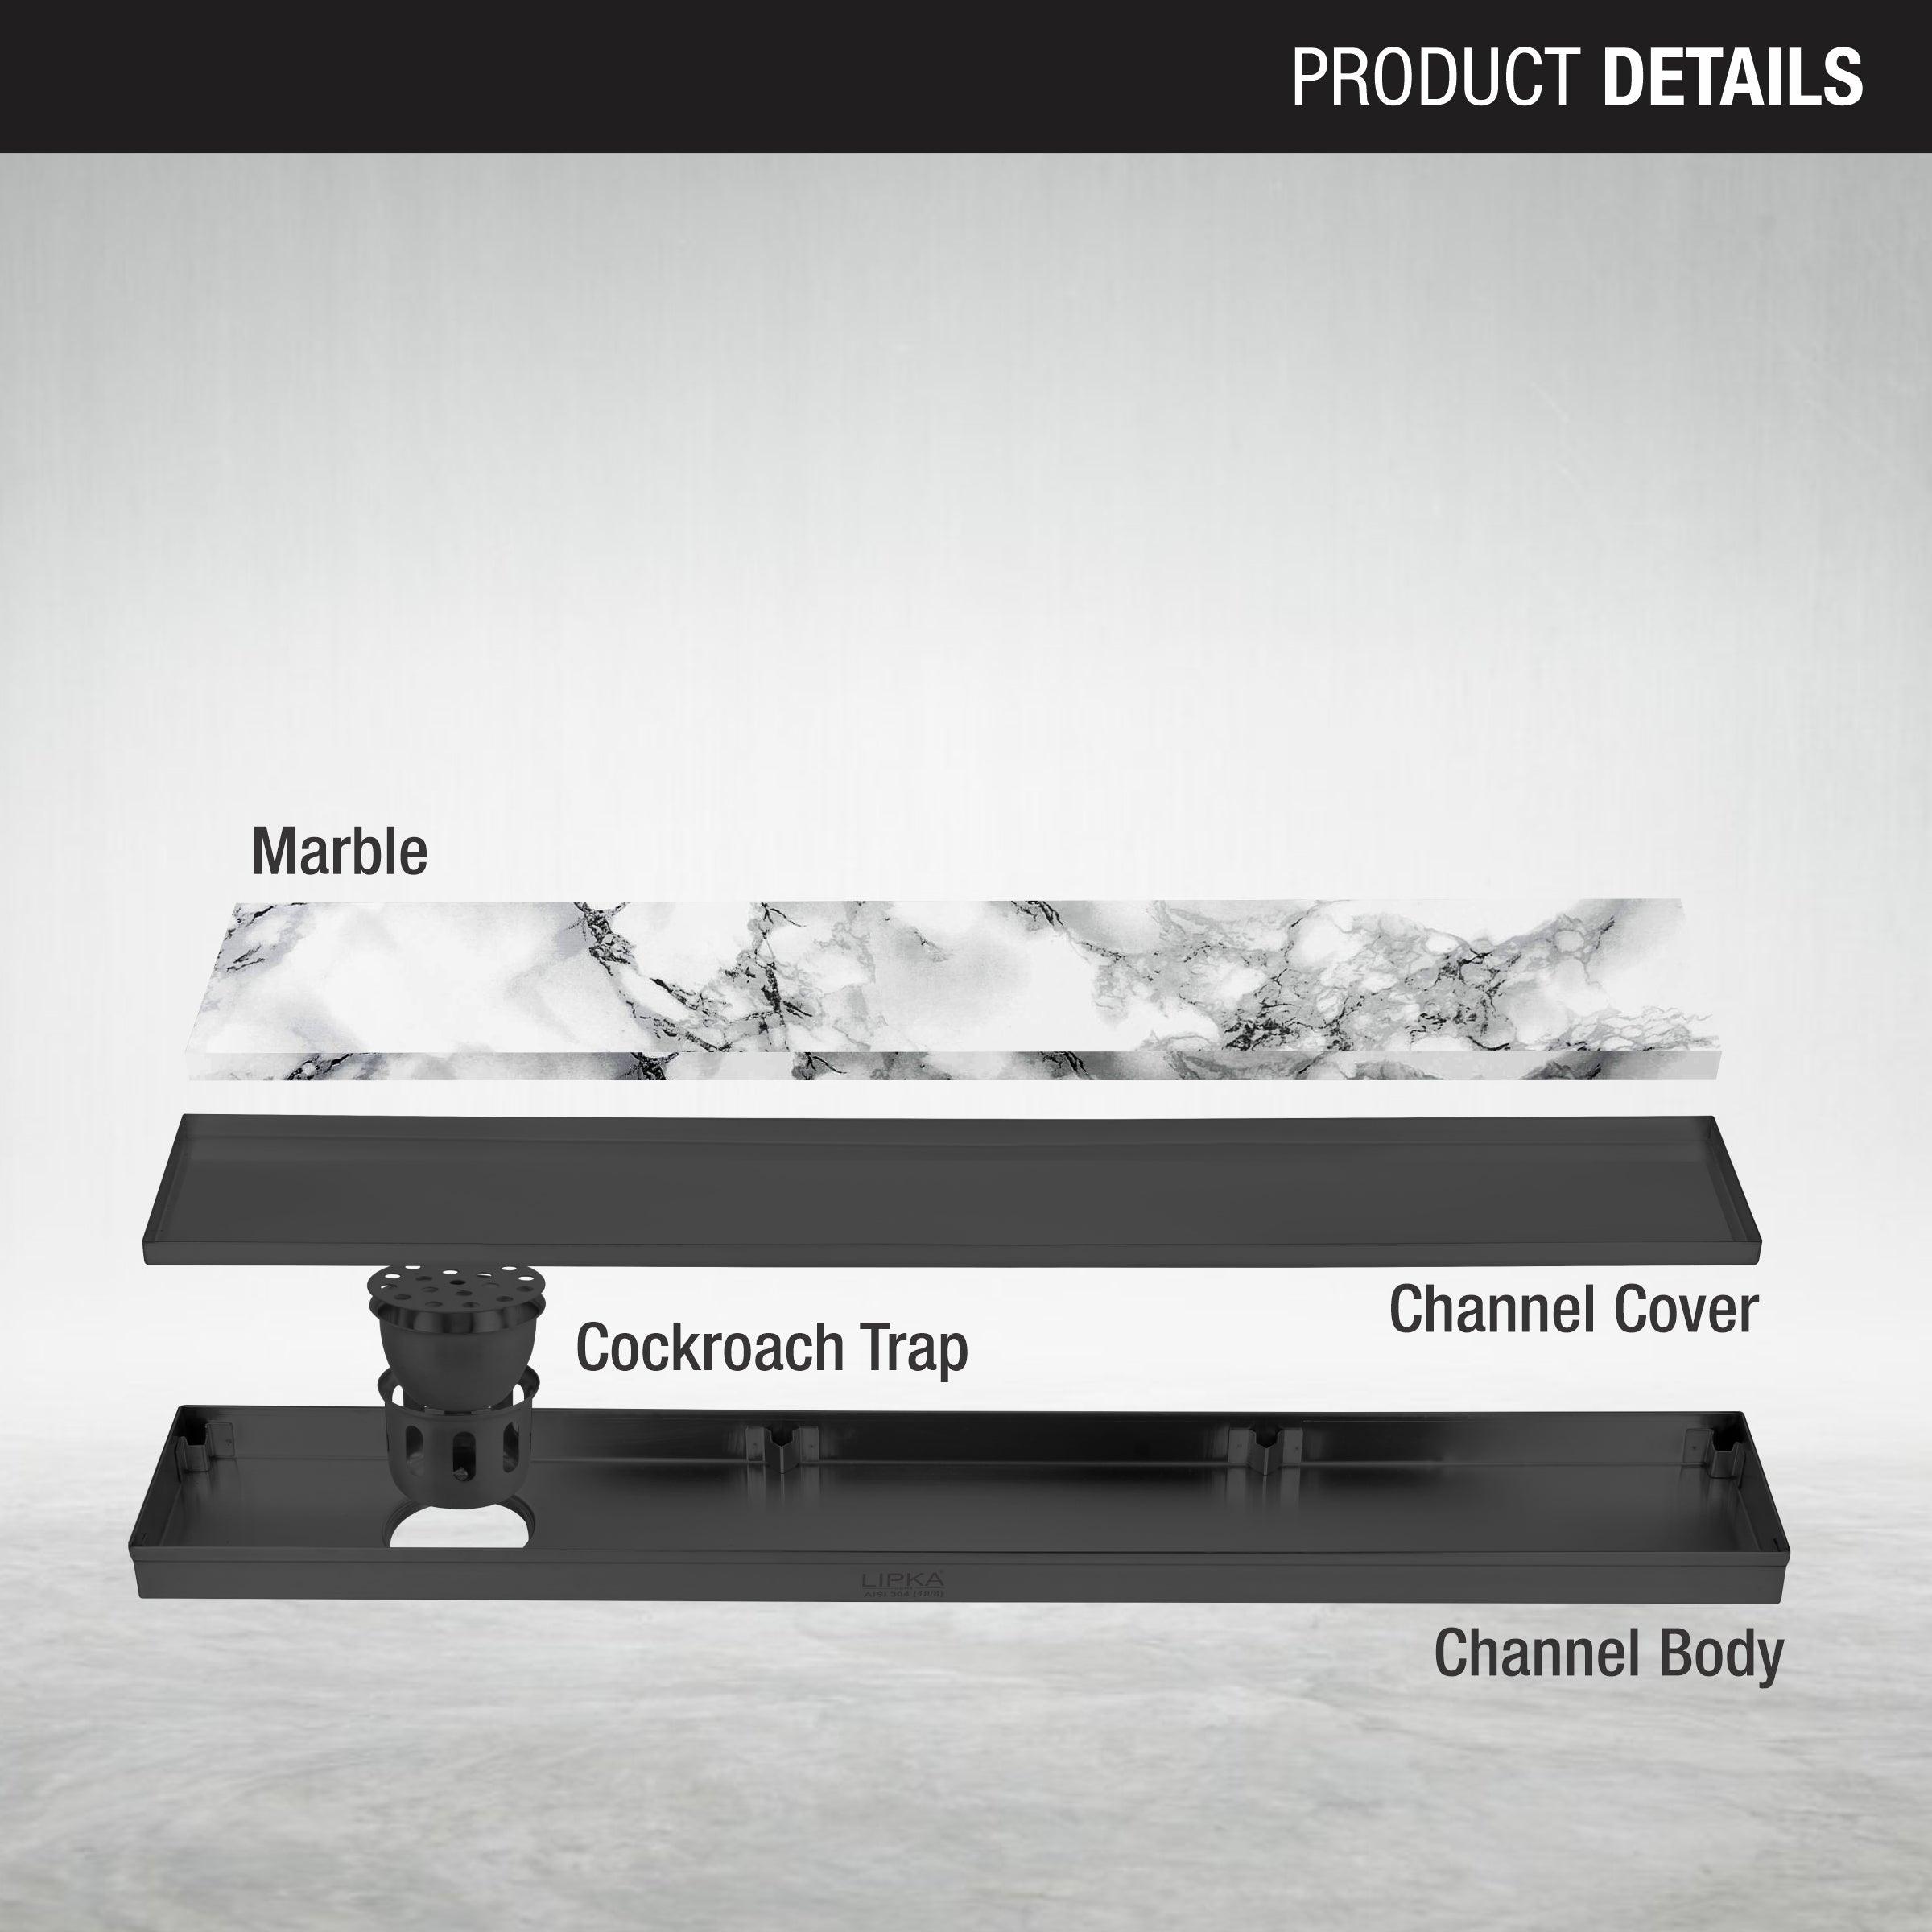 Marble Insert Shower Drain Channel - Black (40 x 5 Inches) - LIPKA - Lipka Home